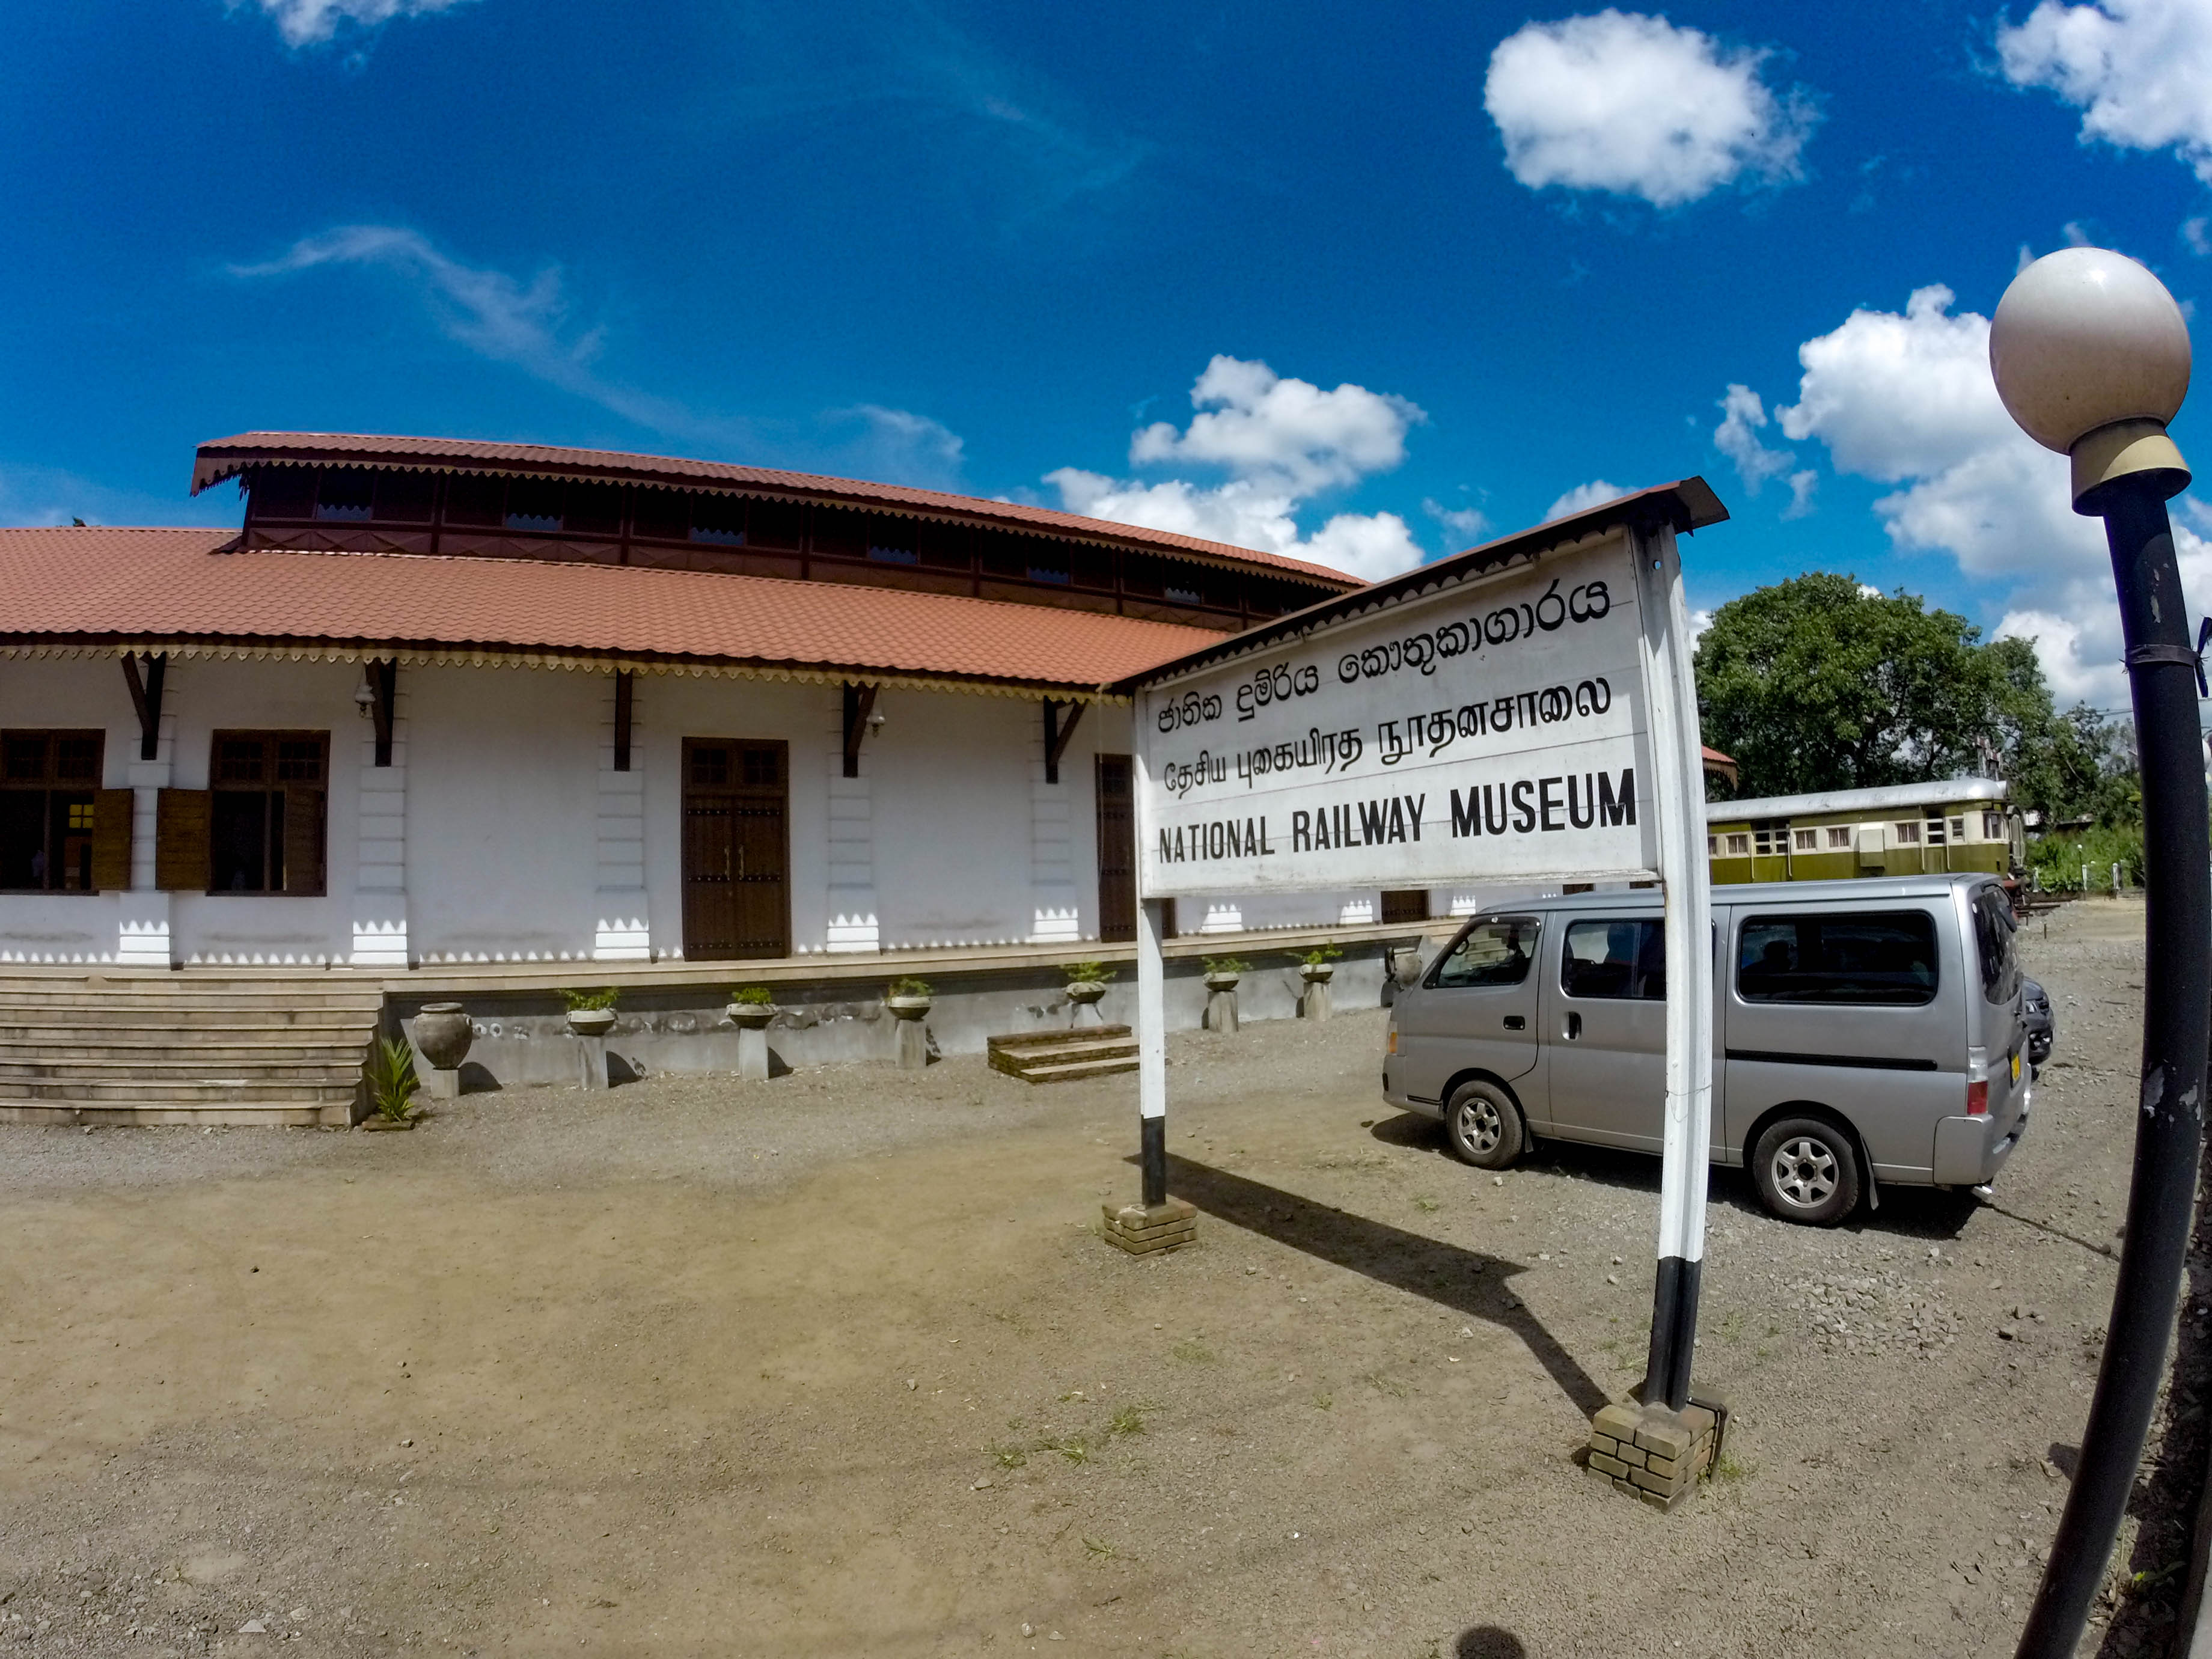 The entrance of the Railway museum- Kadugannawa, Kandy